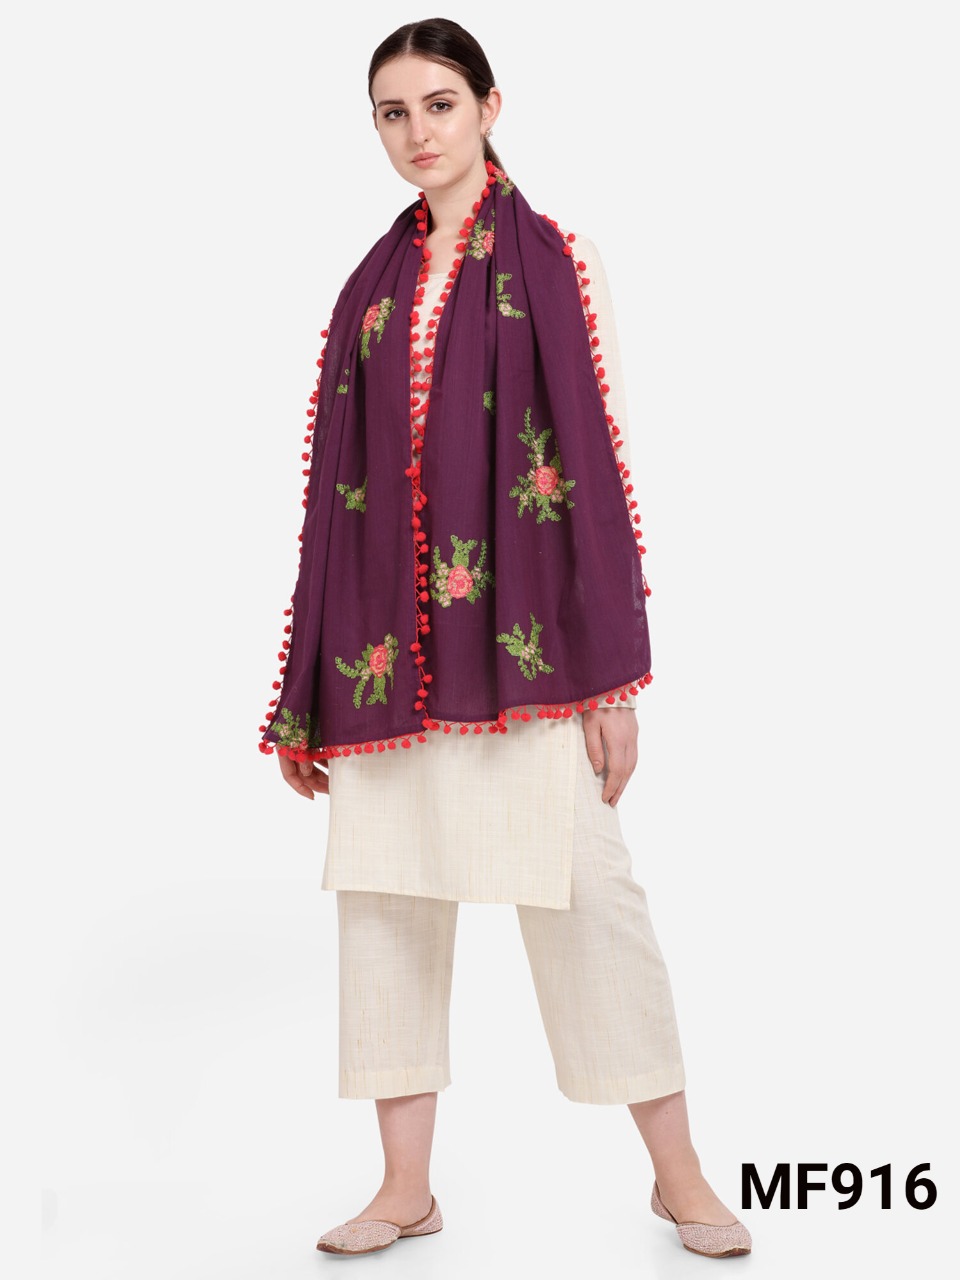 Mesmora fashion d no 901 to 916 khadi attrective look stoles catalog